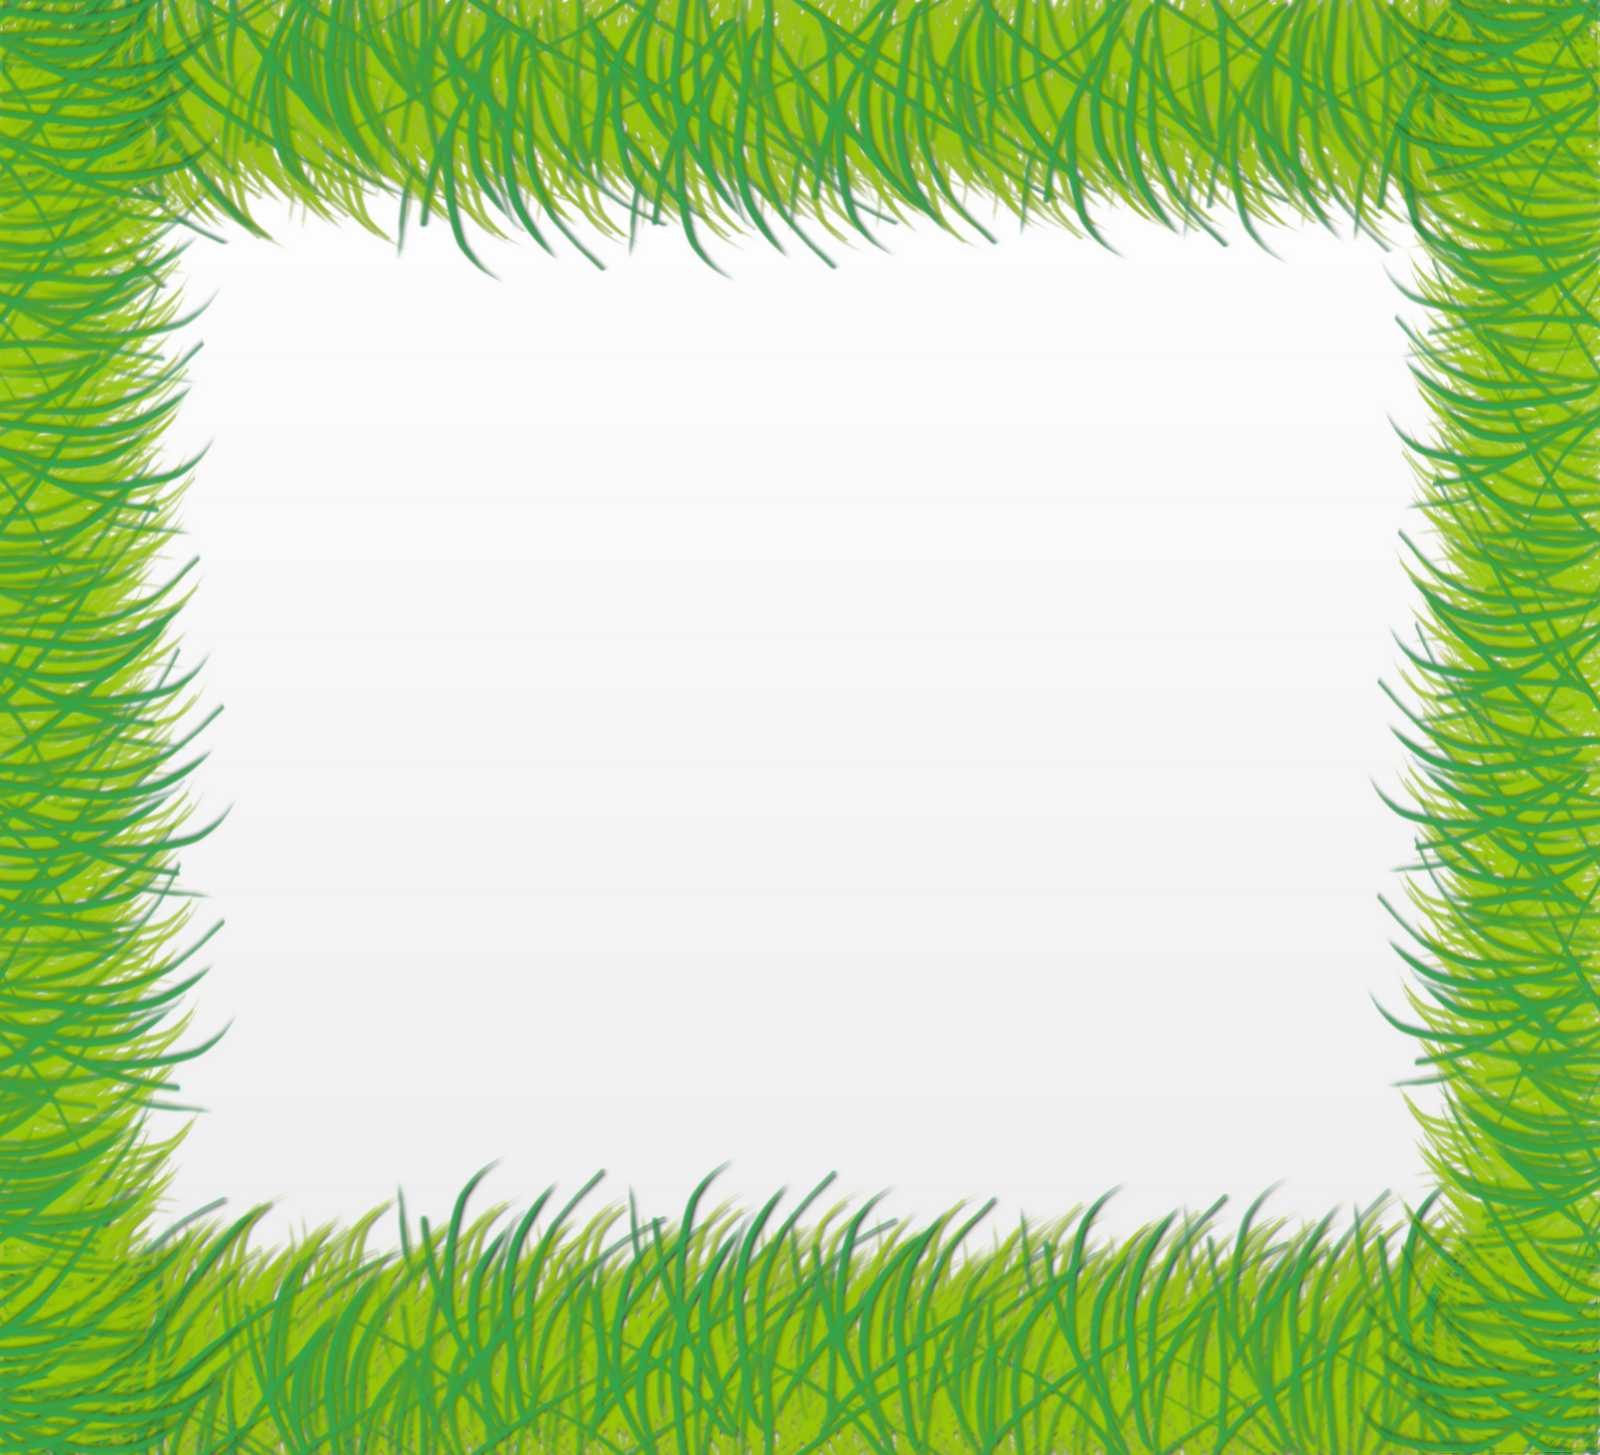 free clip art grass borders - photo #32